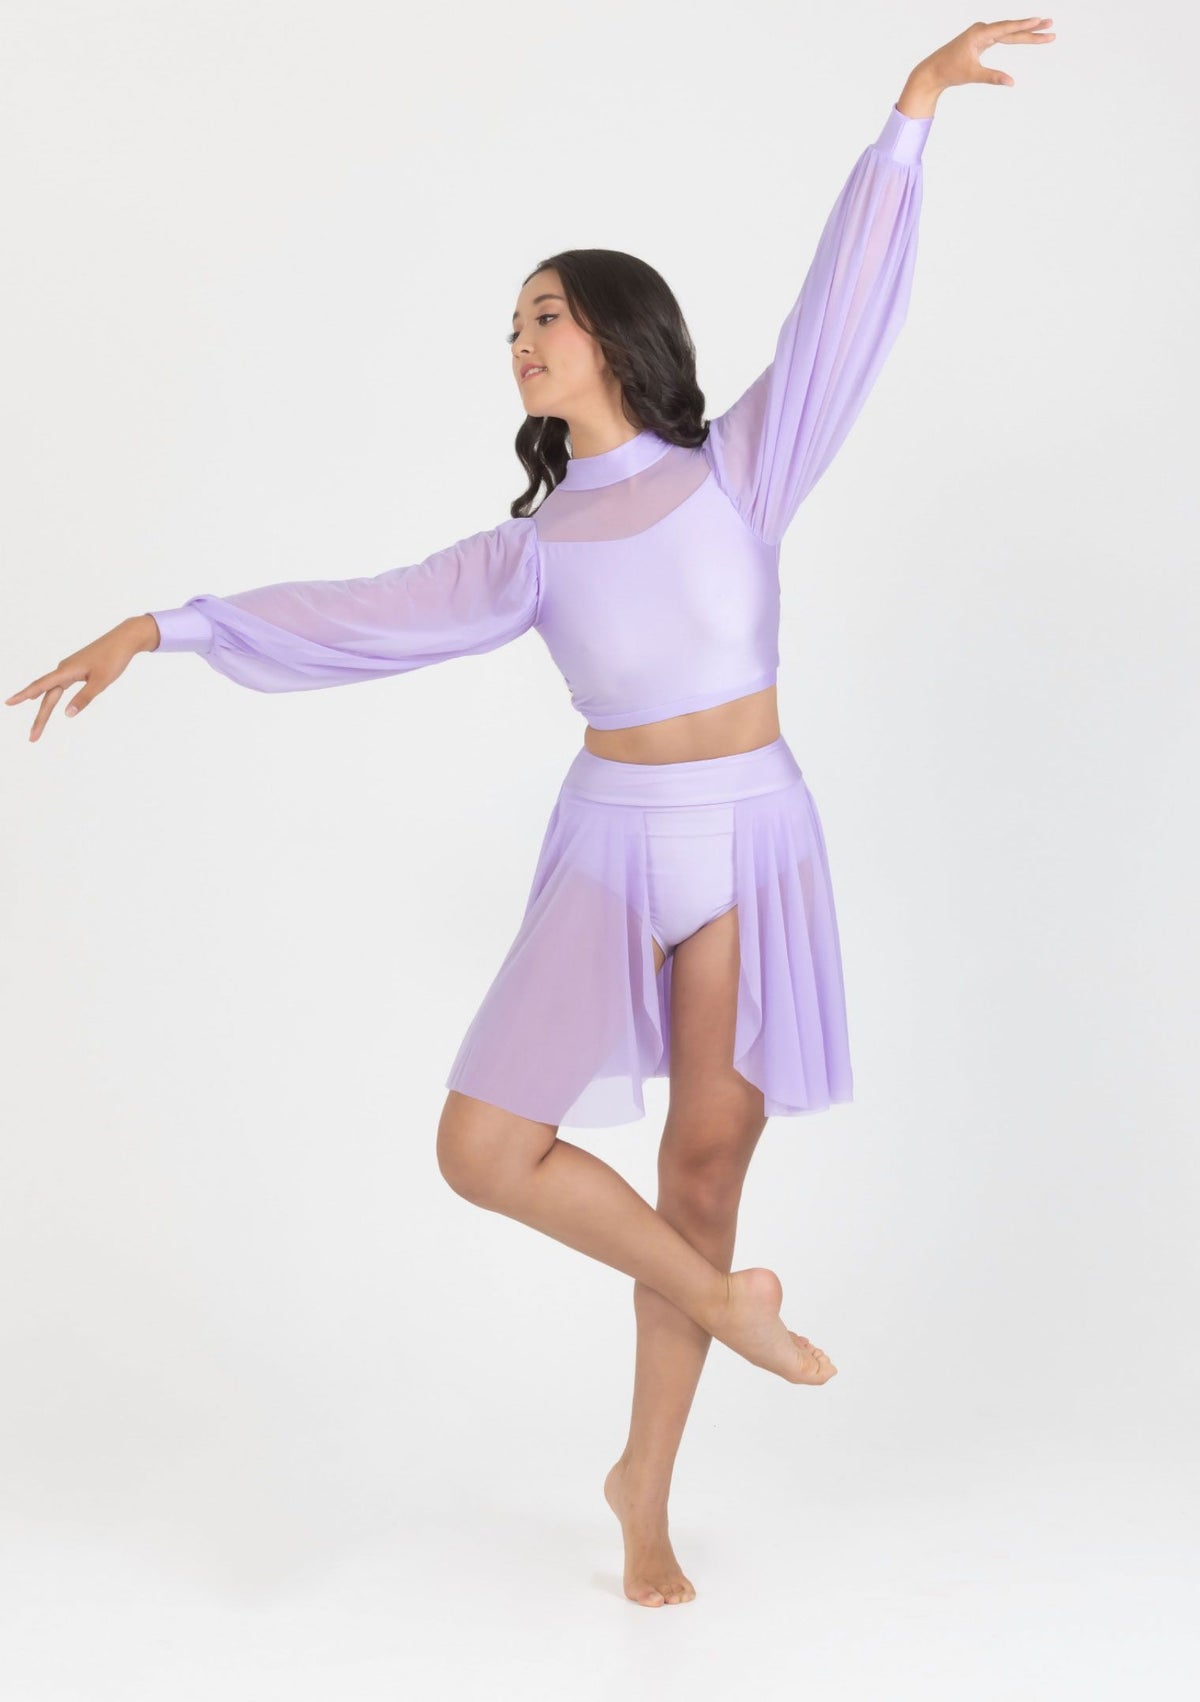 lilaclyrical mesh skirt studio 7 dance costume